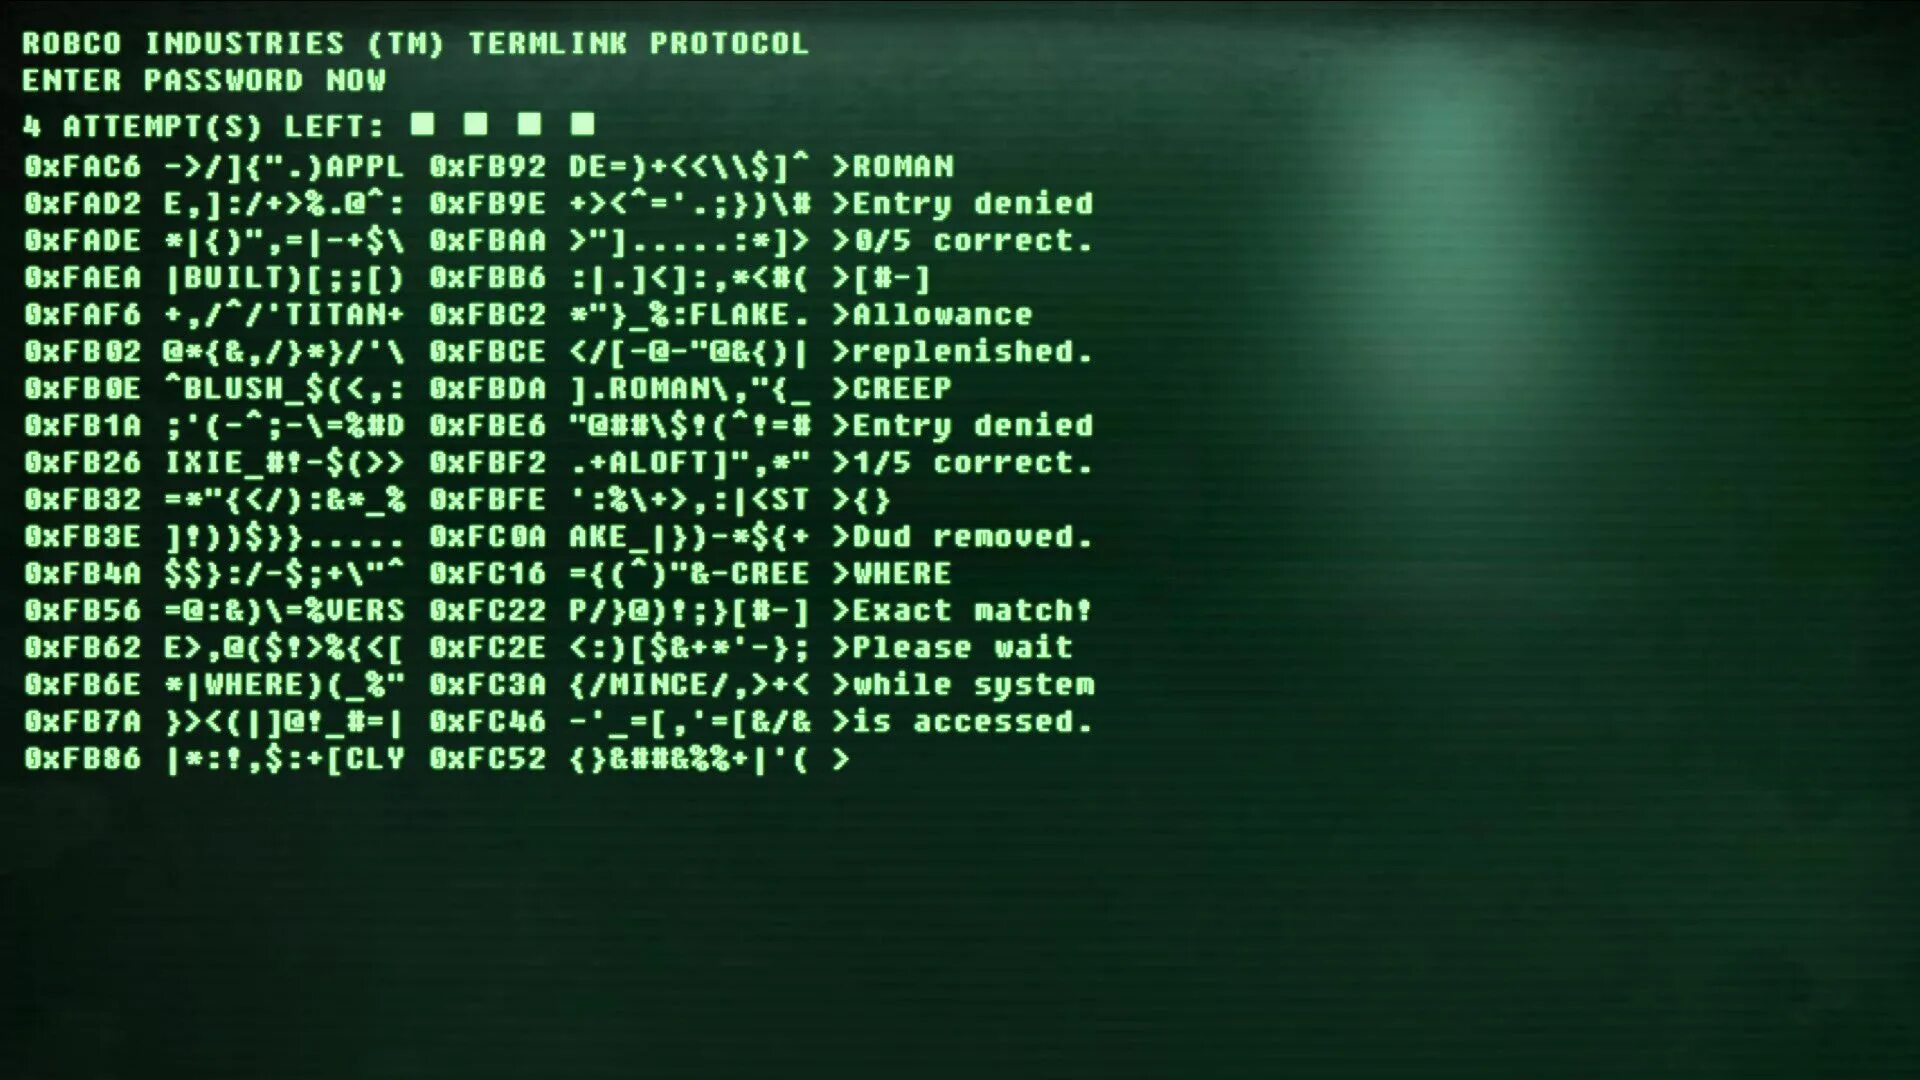 Fallout 3 экран терминала. Хакерские обои. Терминал фоллаут 4 экран. Обои хакер. Чит терминал